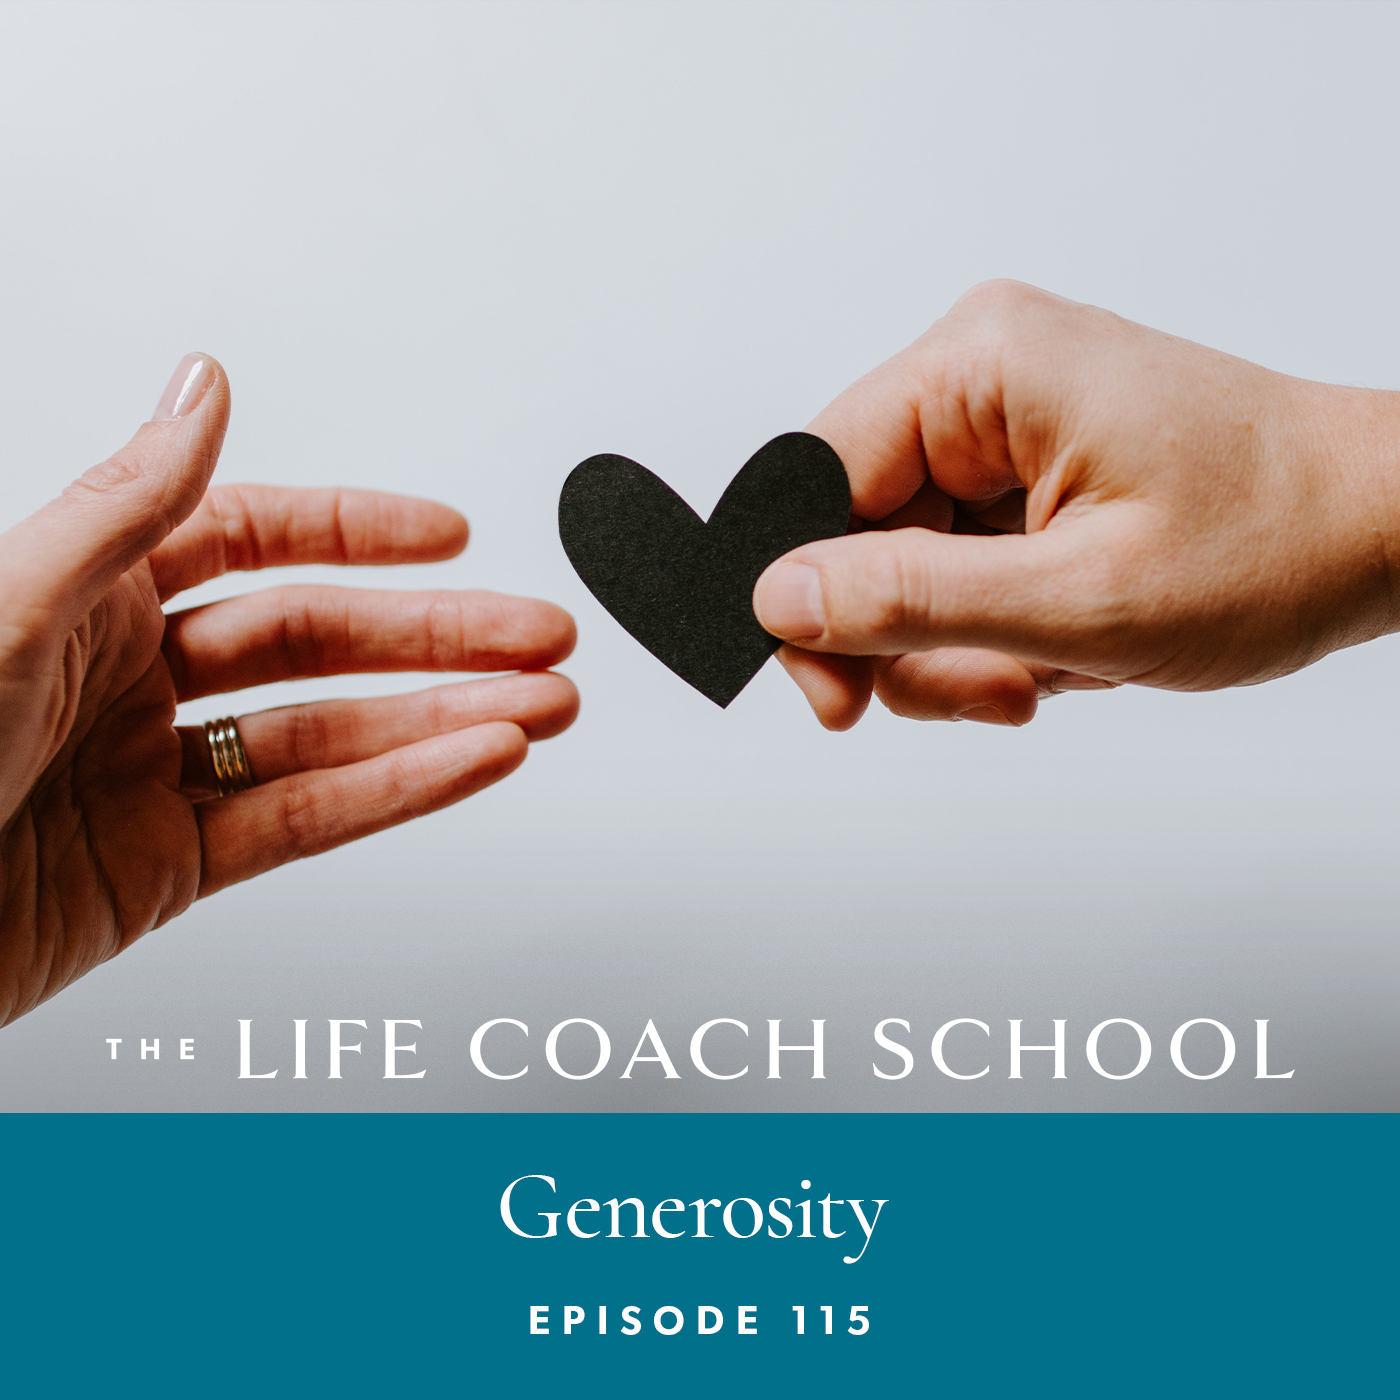 The Life Coach School Podcast with Brooke Castillo | Episode 115 | Generosity